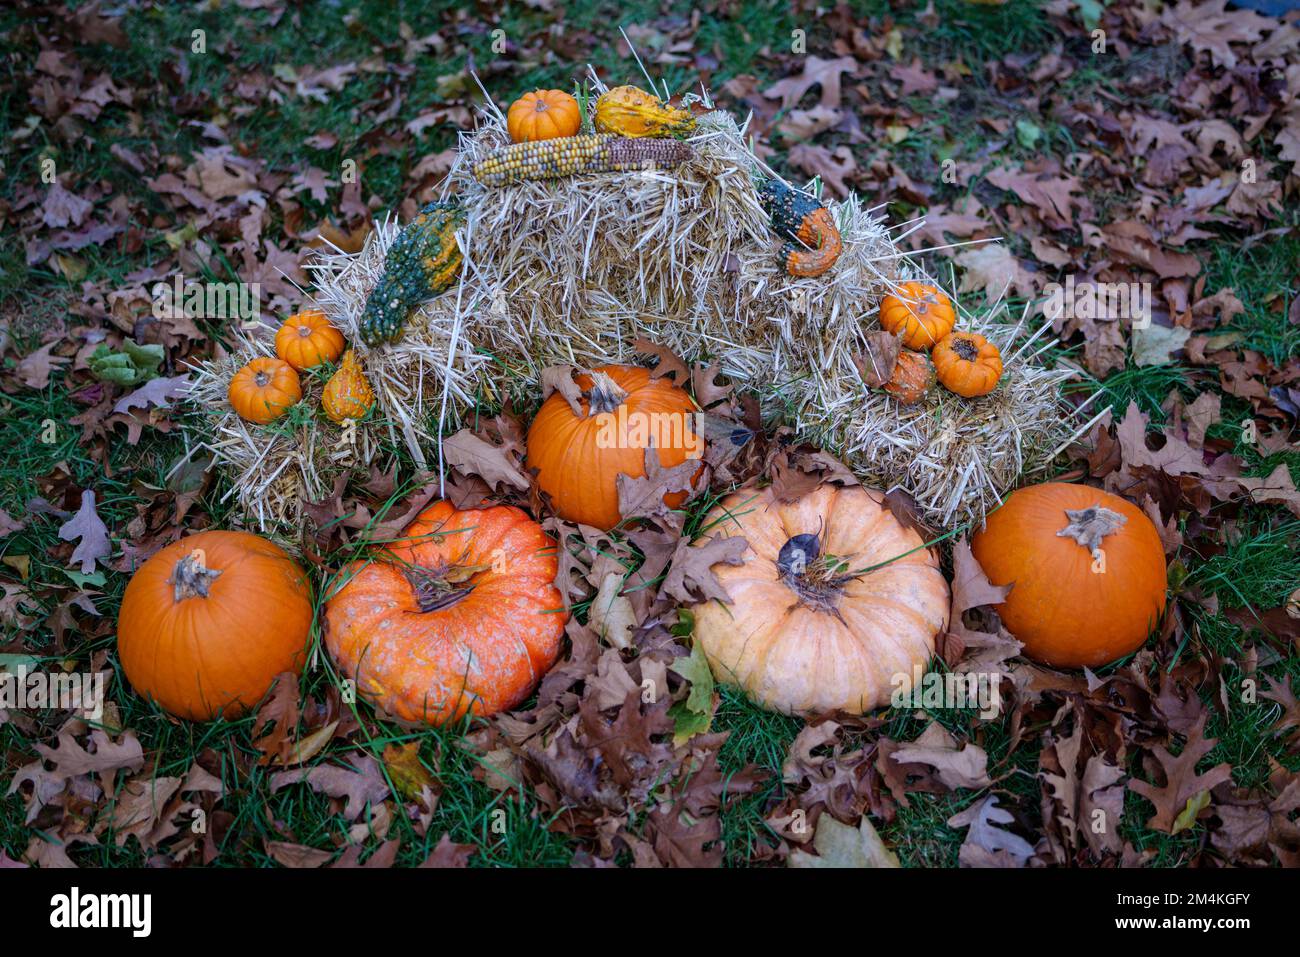 Preparation for Halloween, pumpkins on wet grass whit autumn fallen leaves Stock Photo